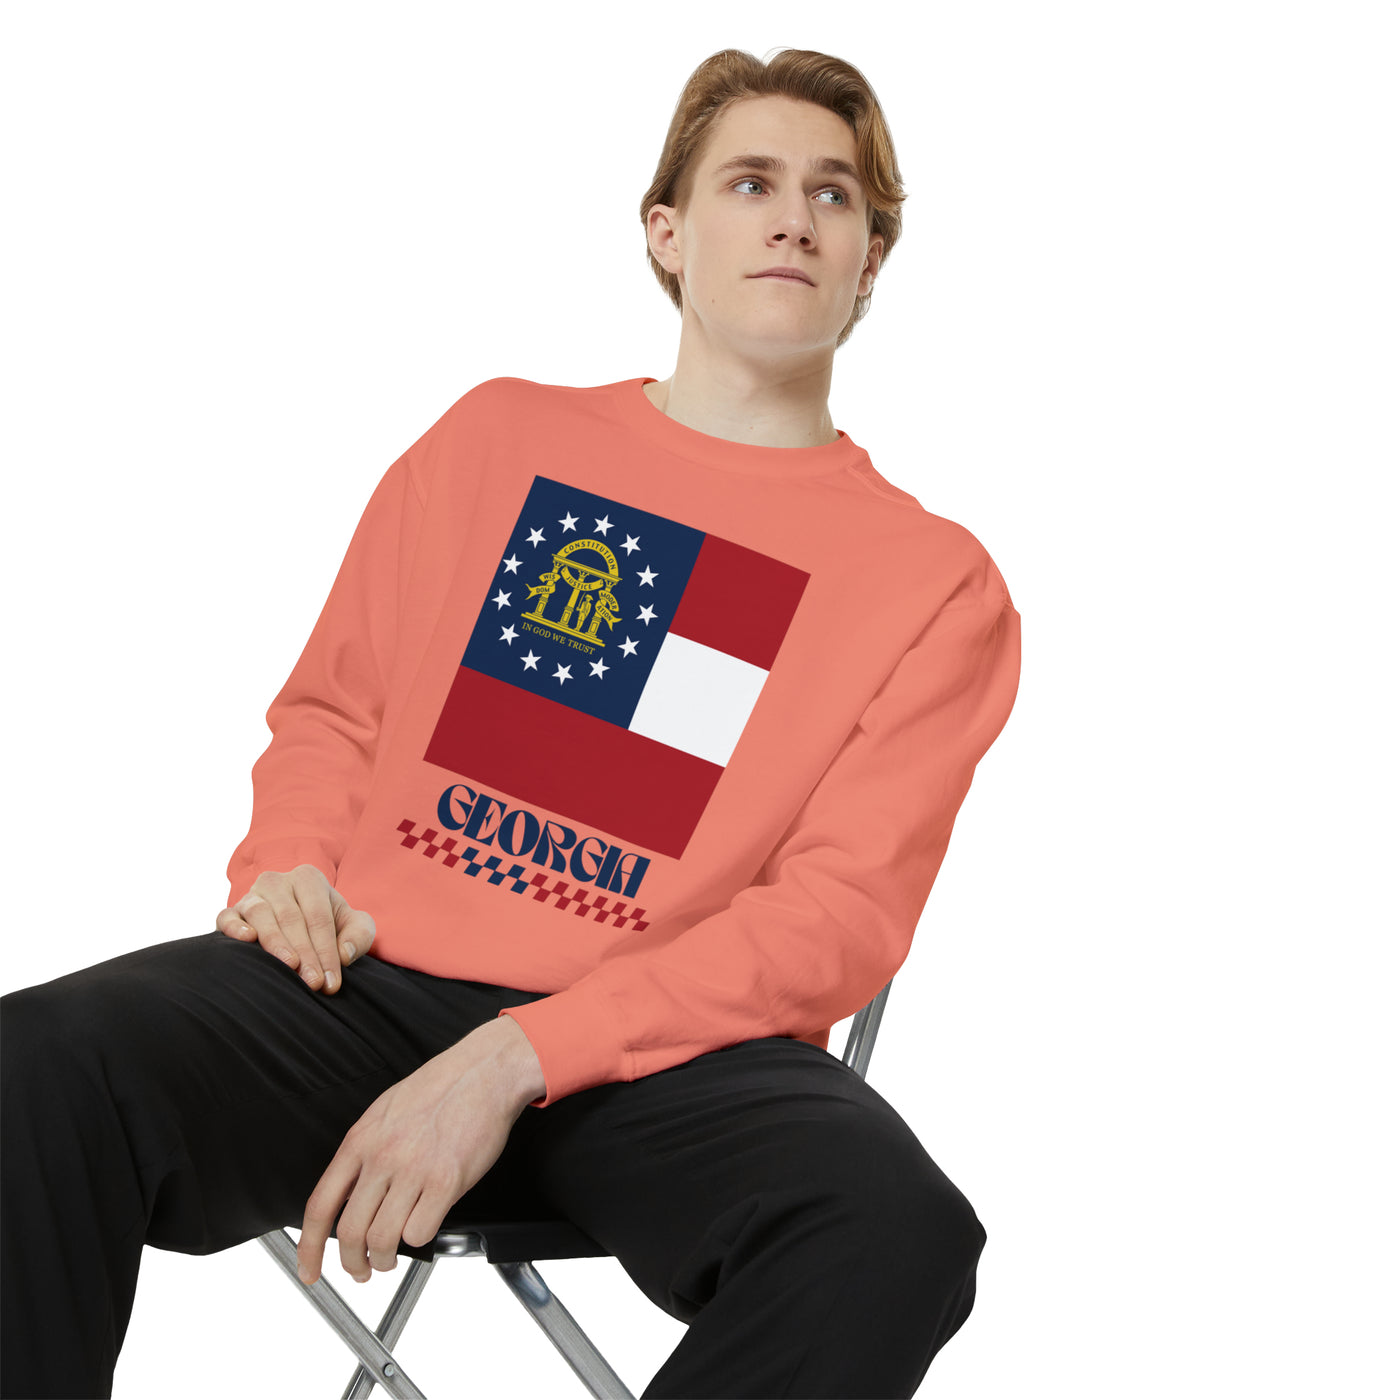 Georgia Retro Sweatshirt